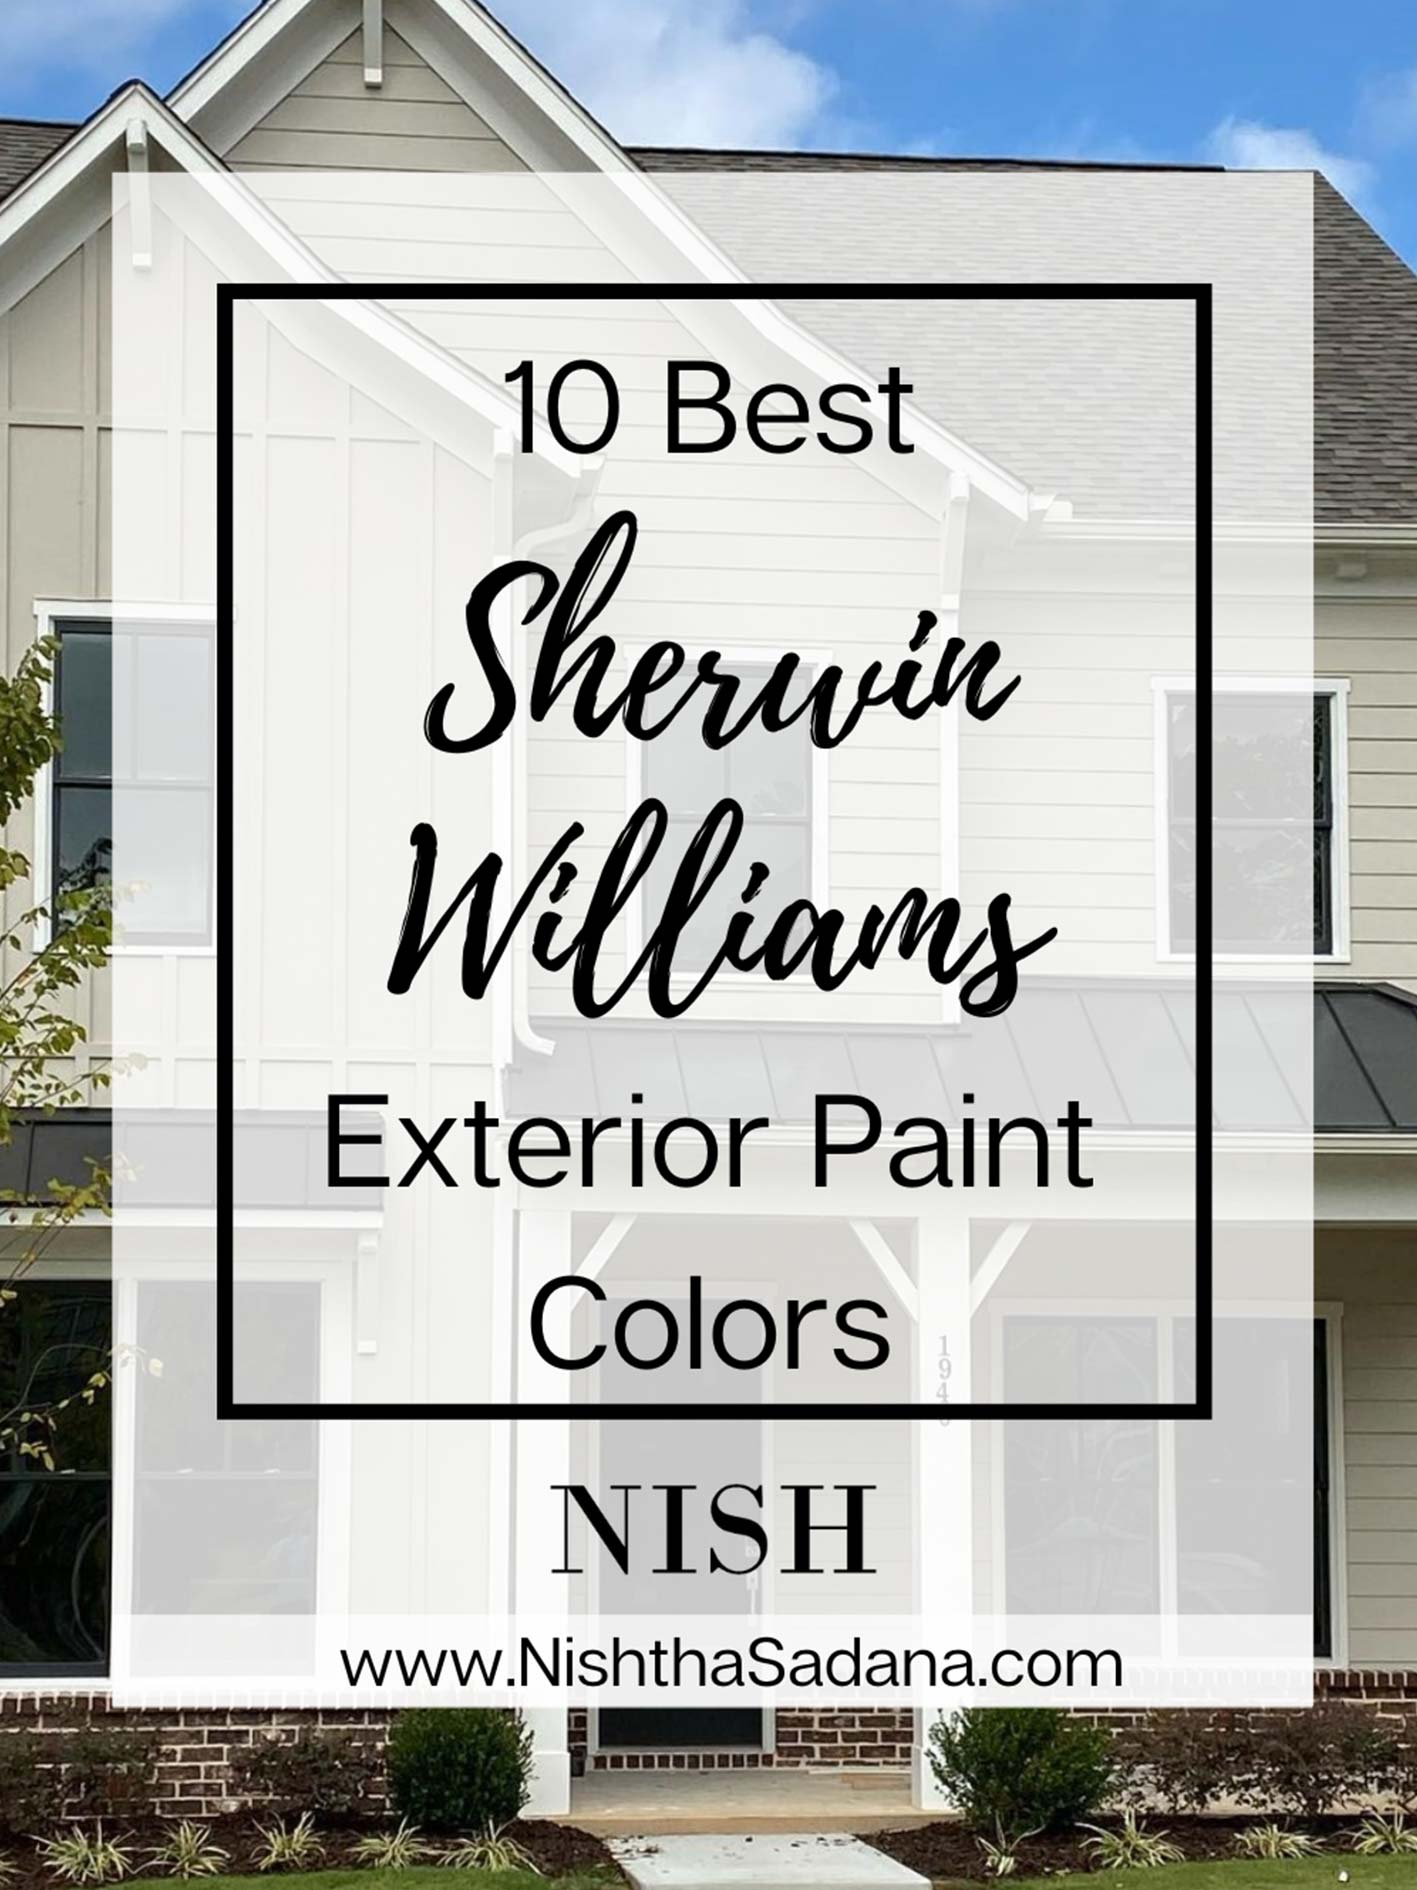 10 Best Sherwin Williams Exterior Paint Colors NISH